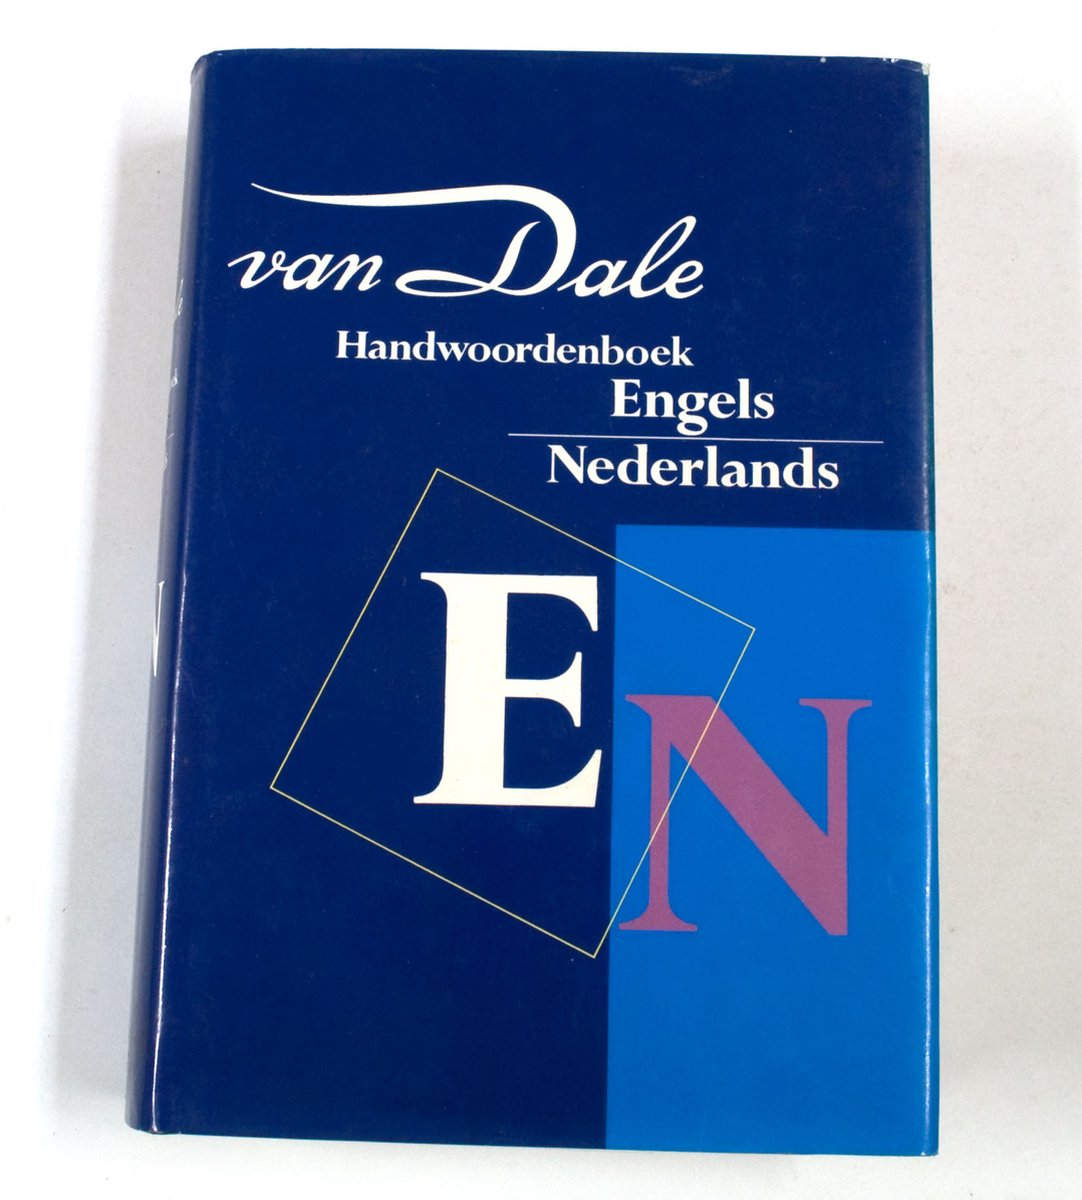 Van Dale handwoordenboek Engels-Nederlands / Van Dale handwoordenboeken voor hedendaags taalgebruik